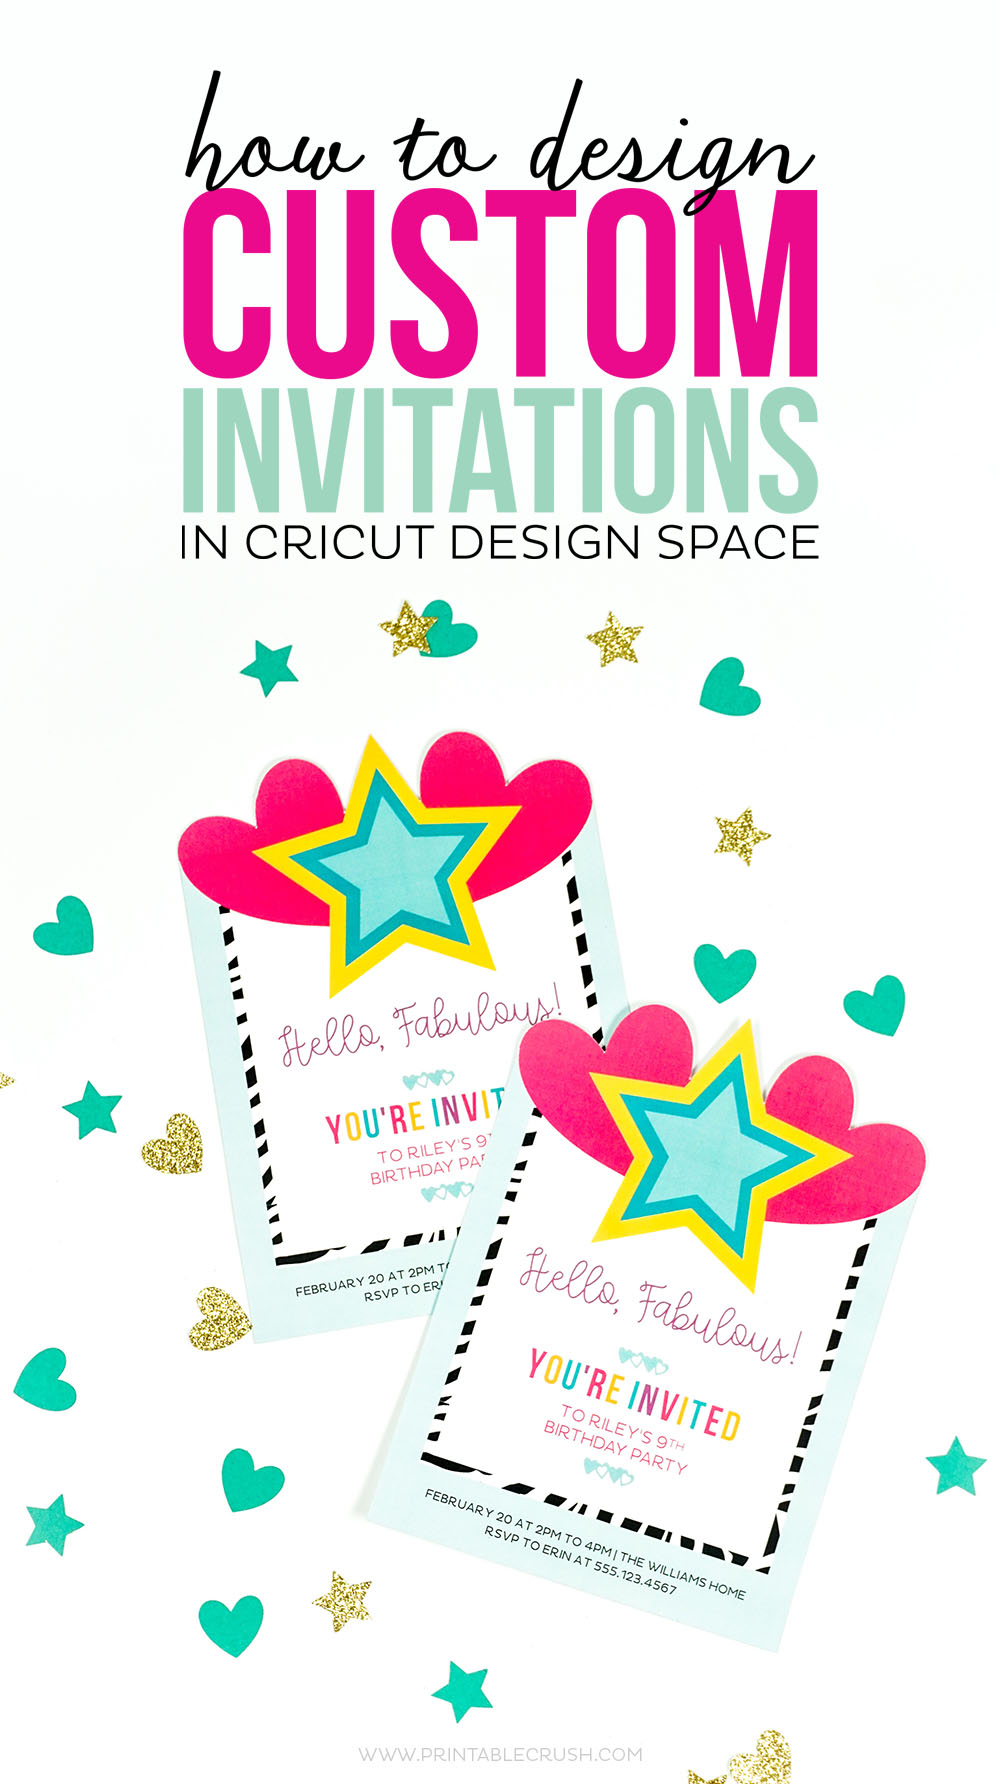 How to Design Custom Invitations in Cricut Design Space ...